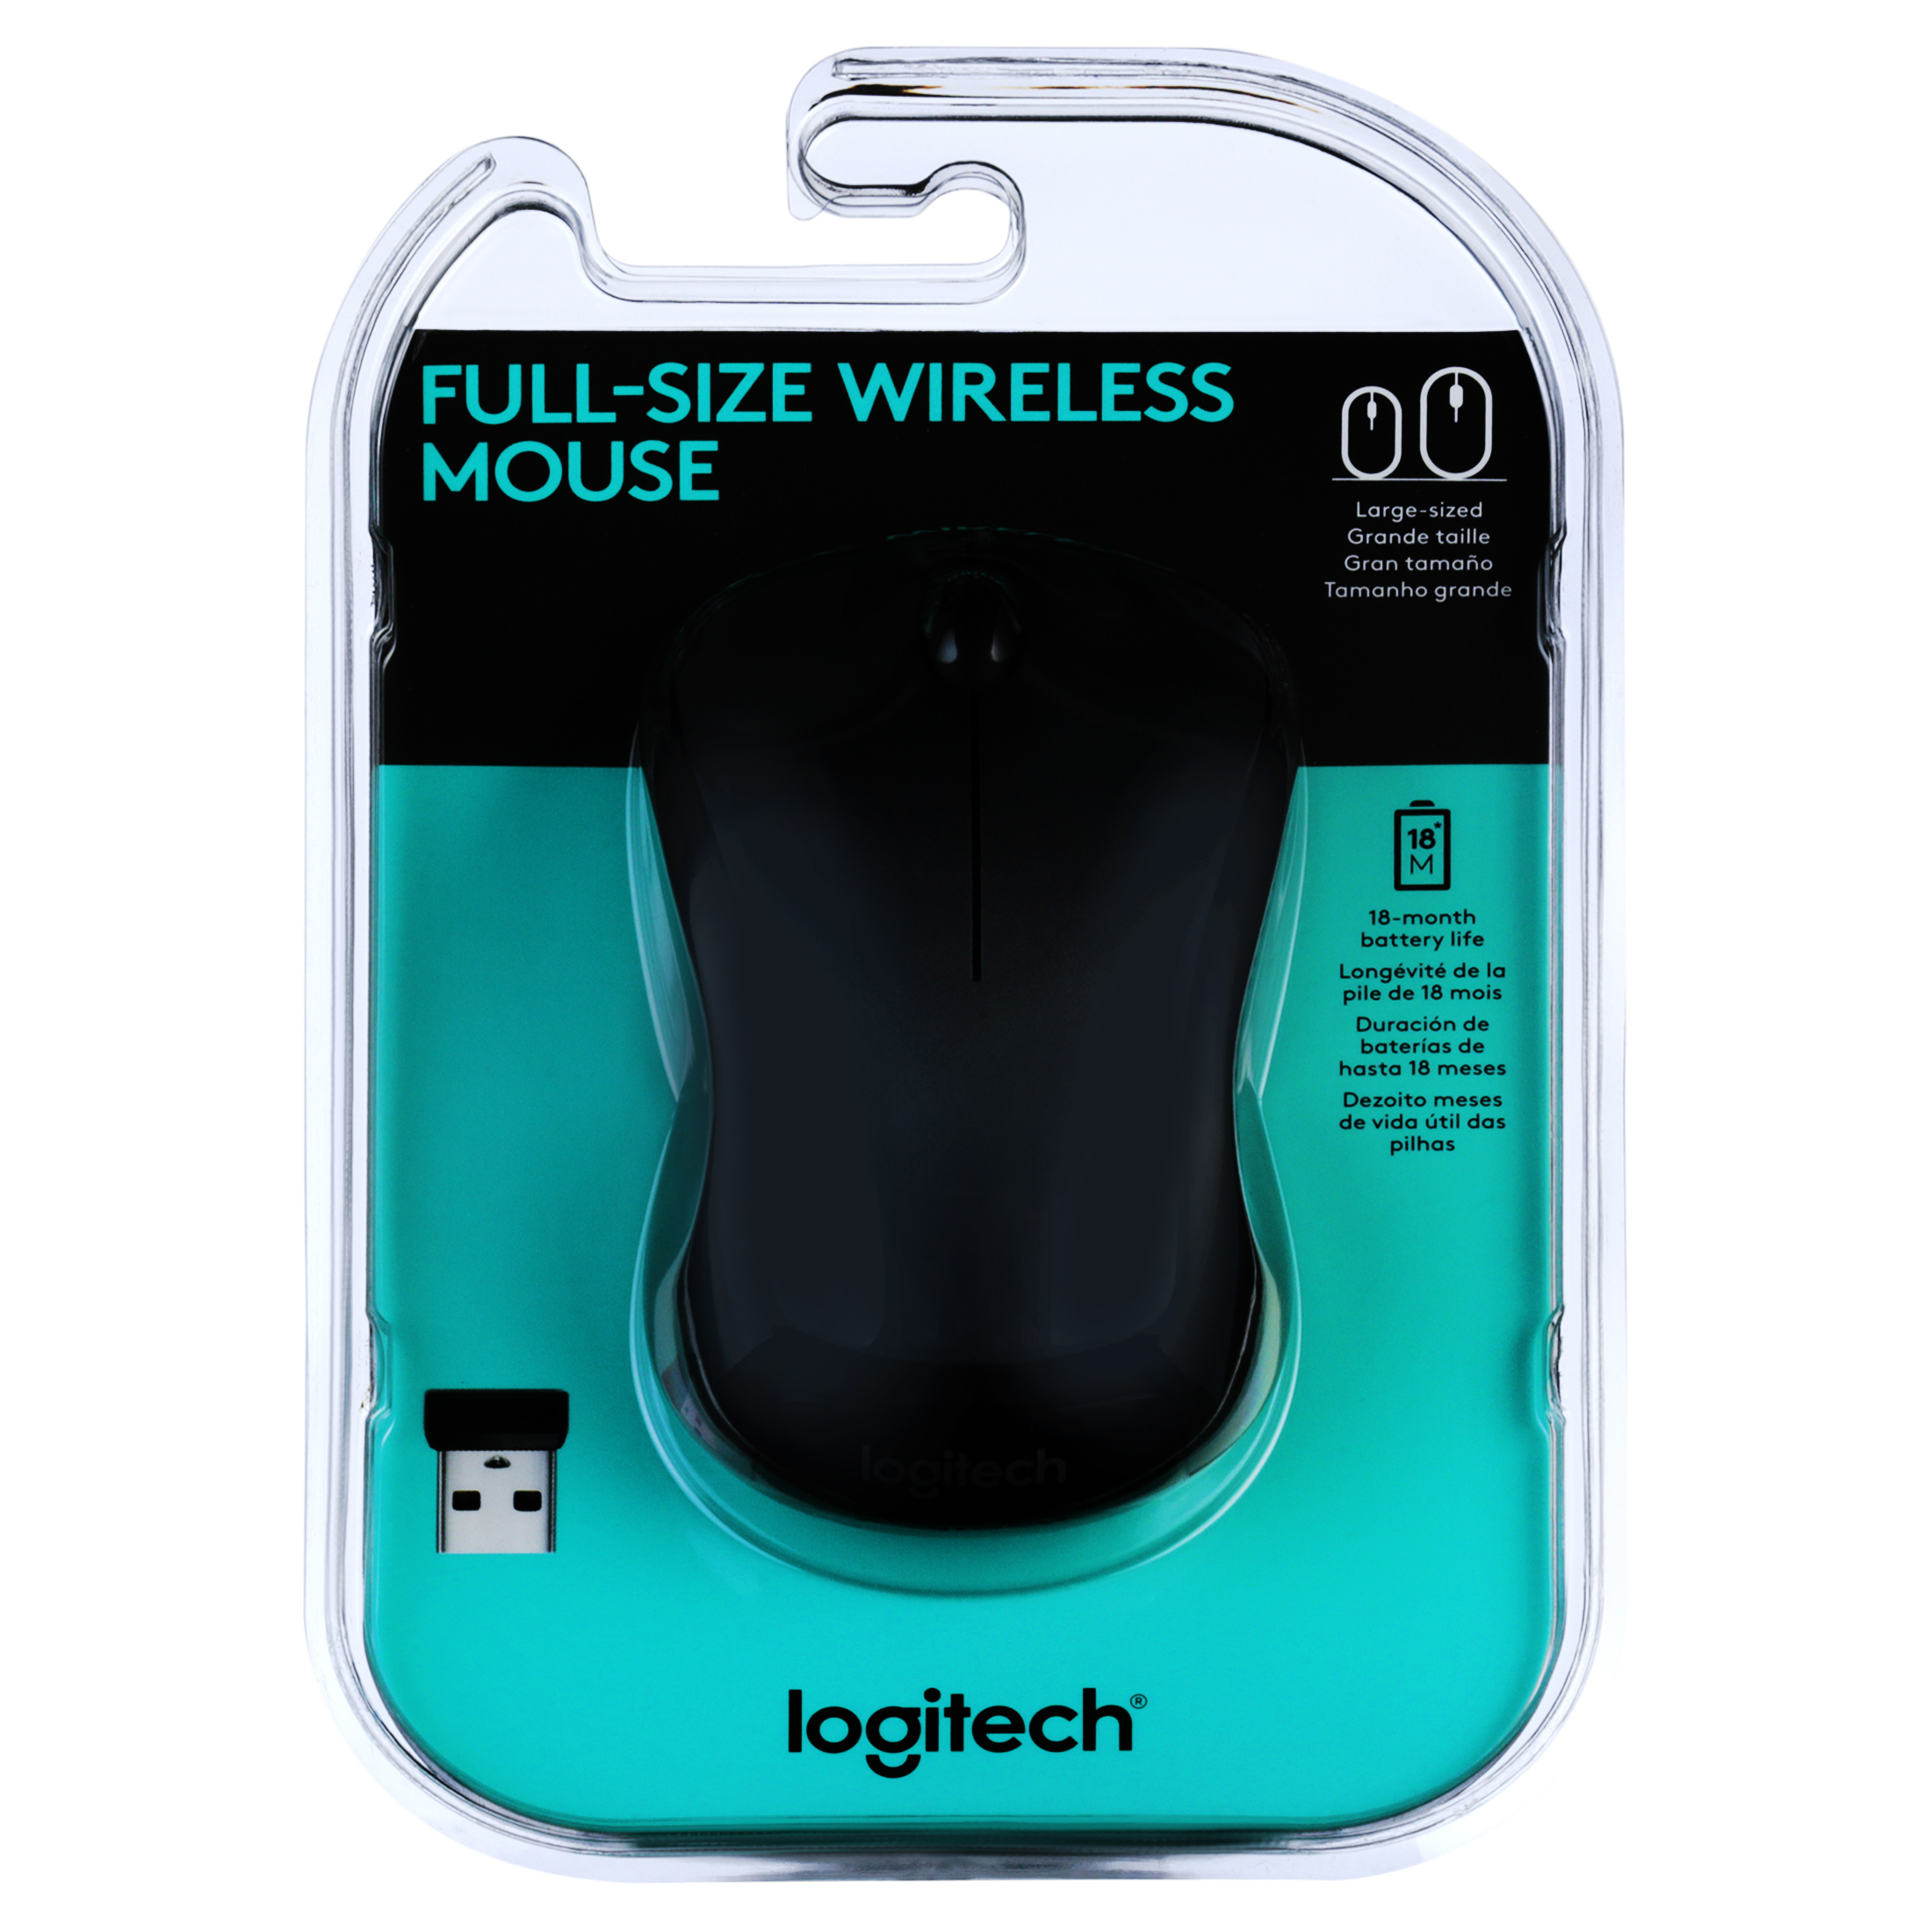 Logitech Full Size Wireless Mouse - Gray - image 5 of 9